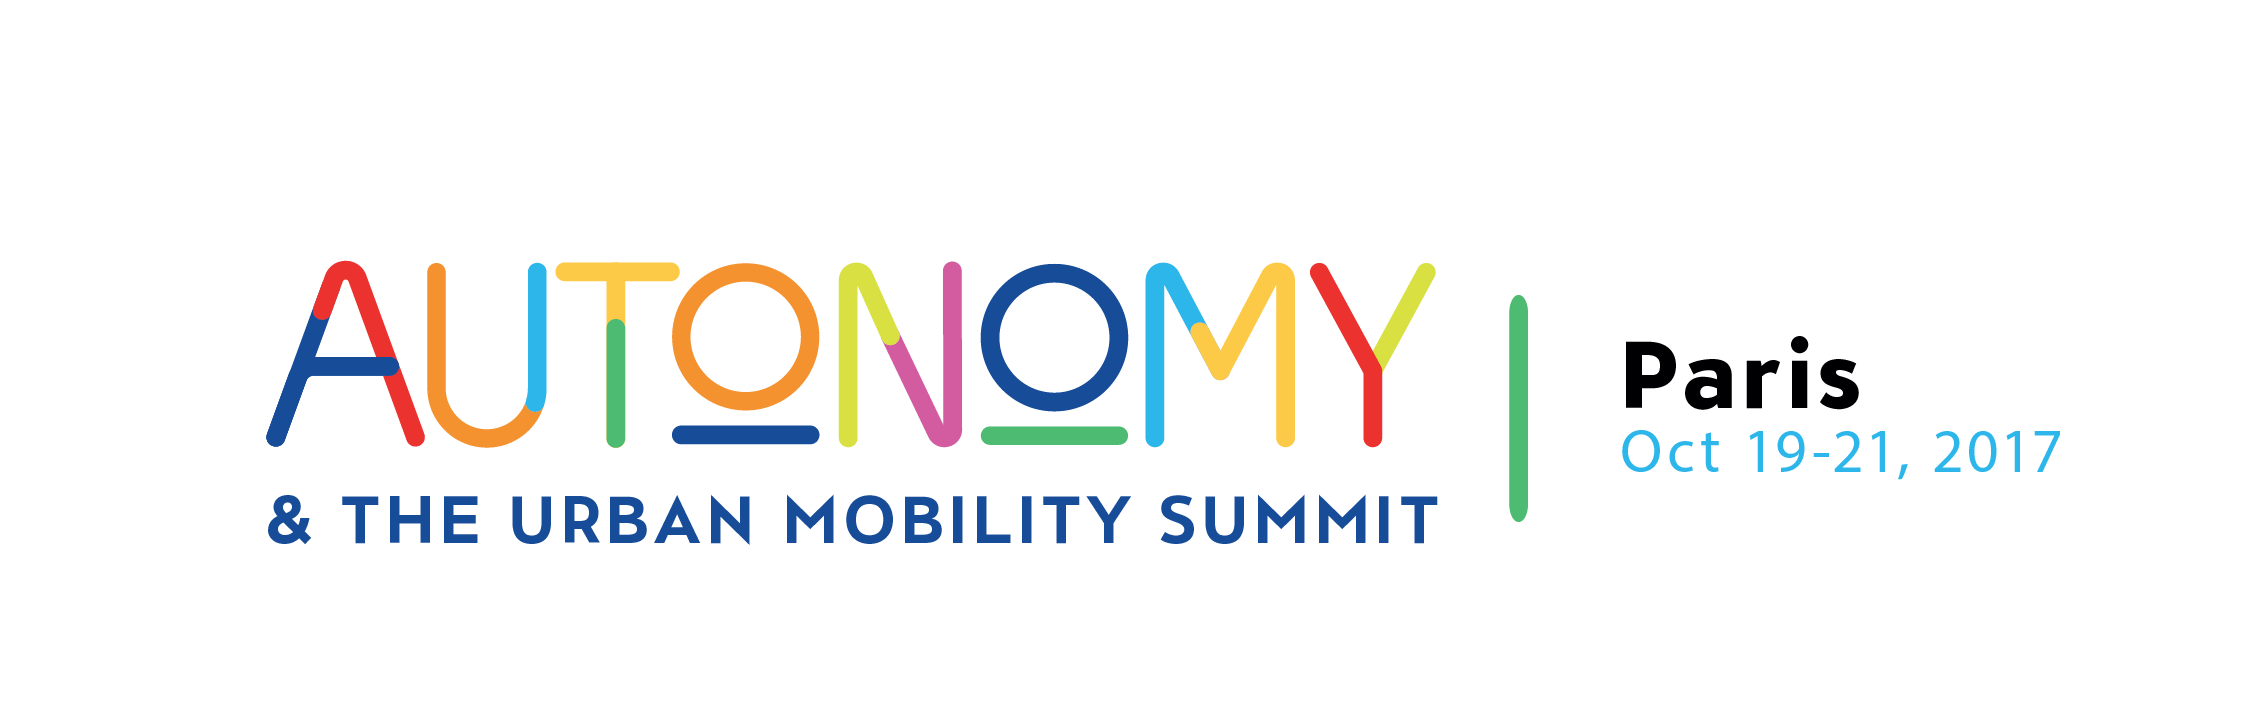 Autonomy Logo - Polis Network - News